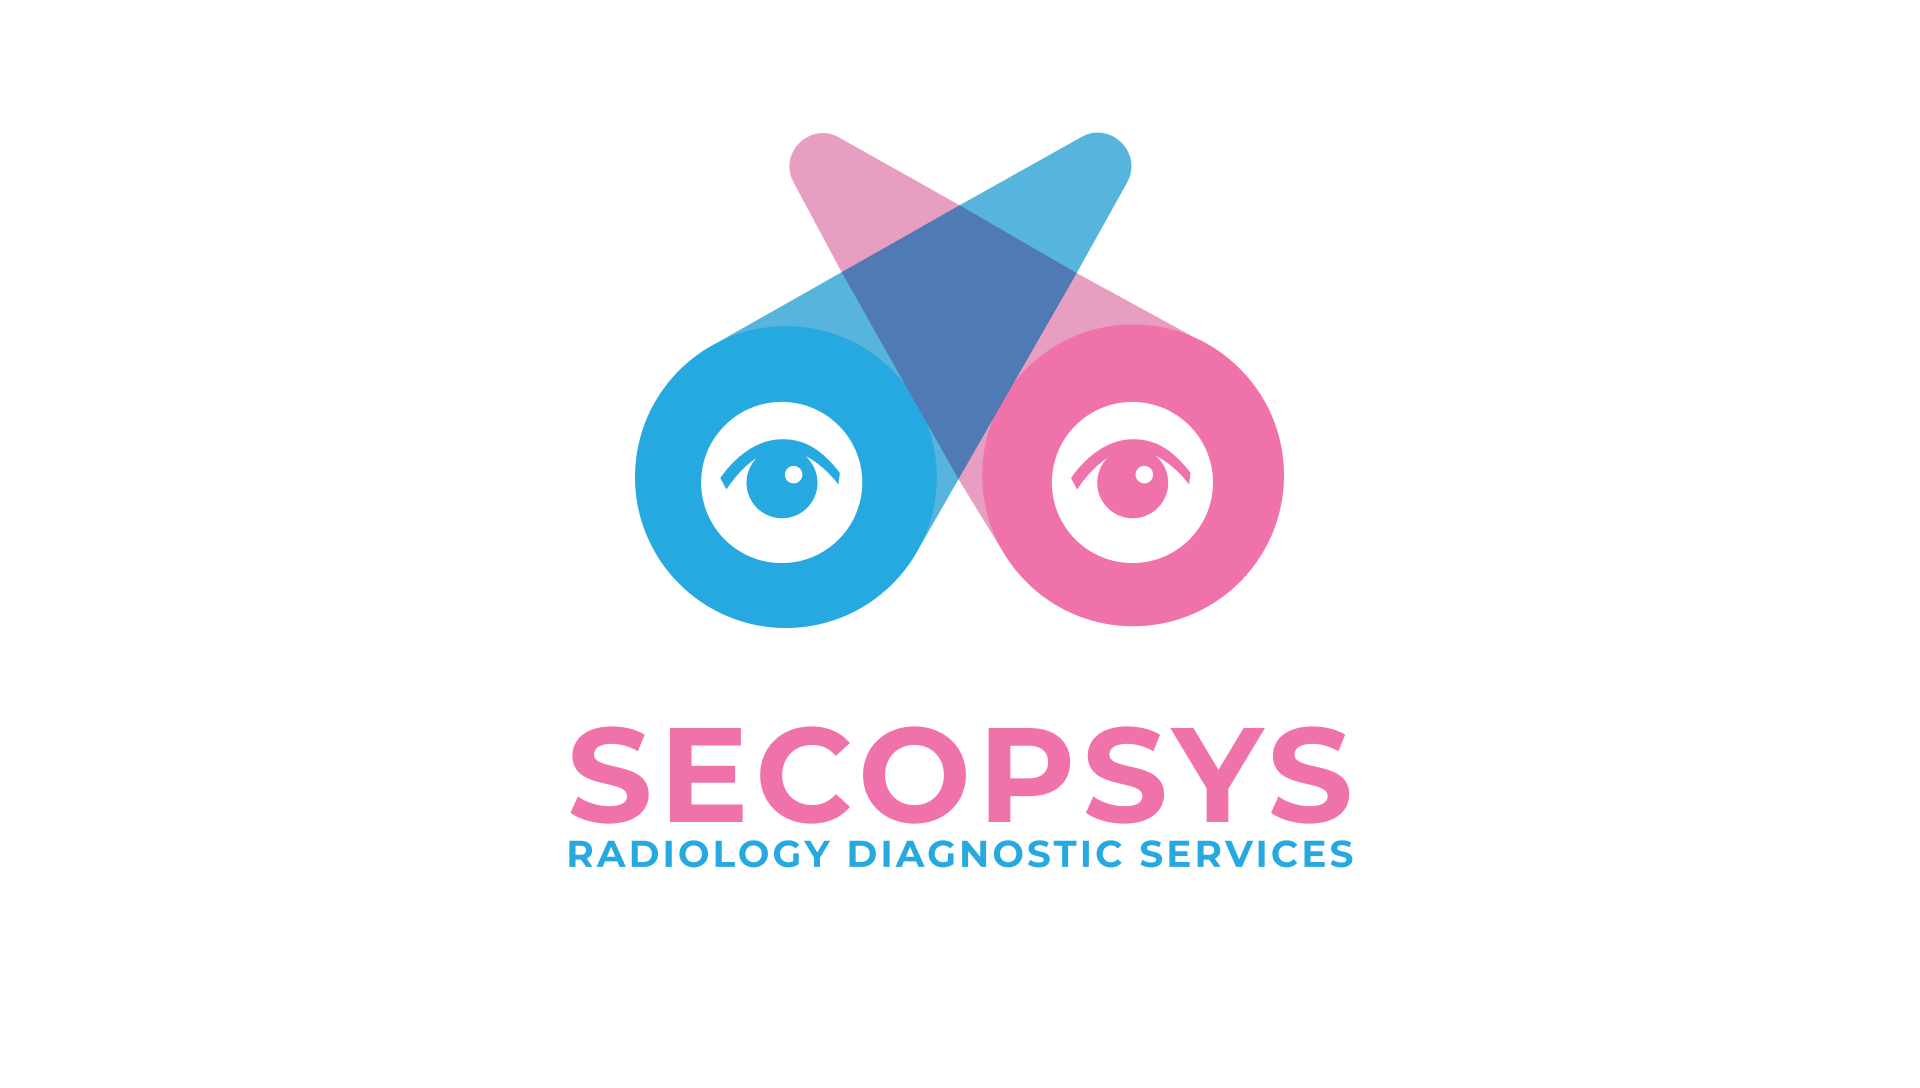 Scopsys Radiology